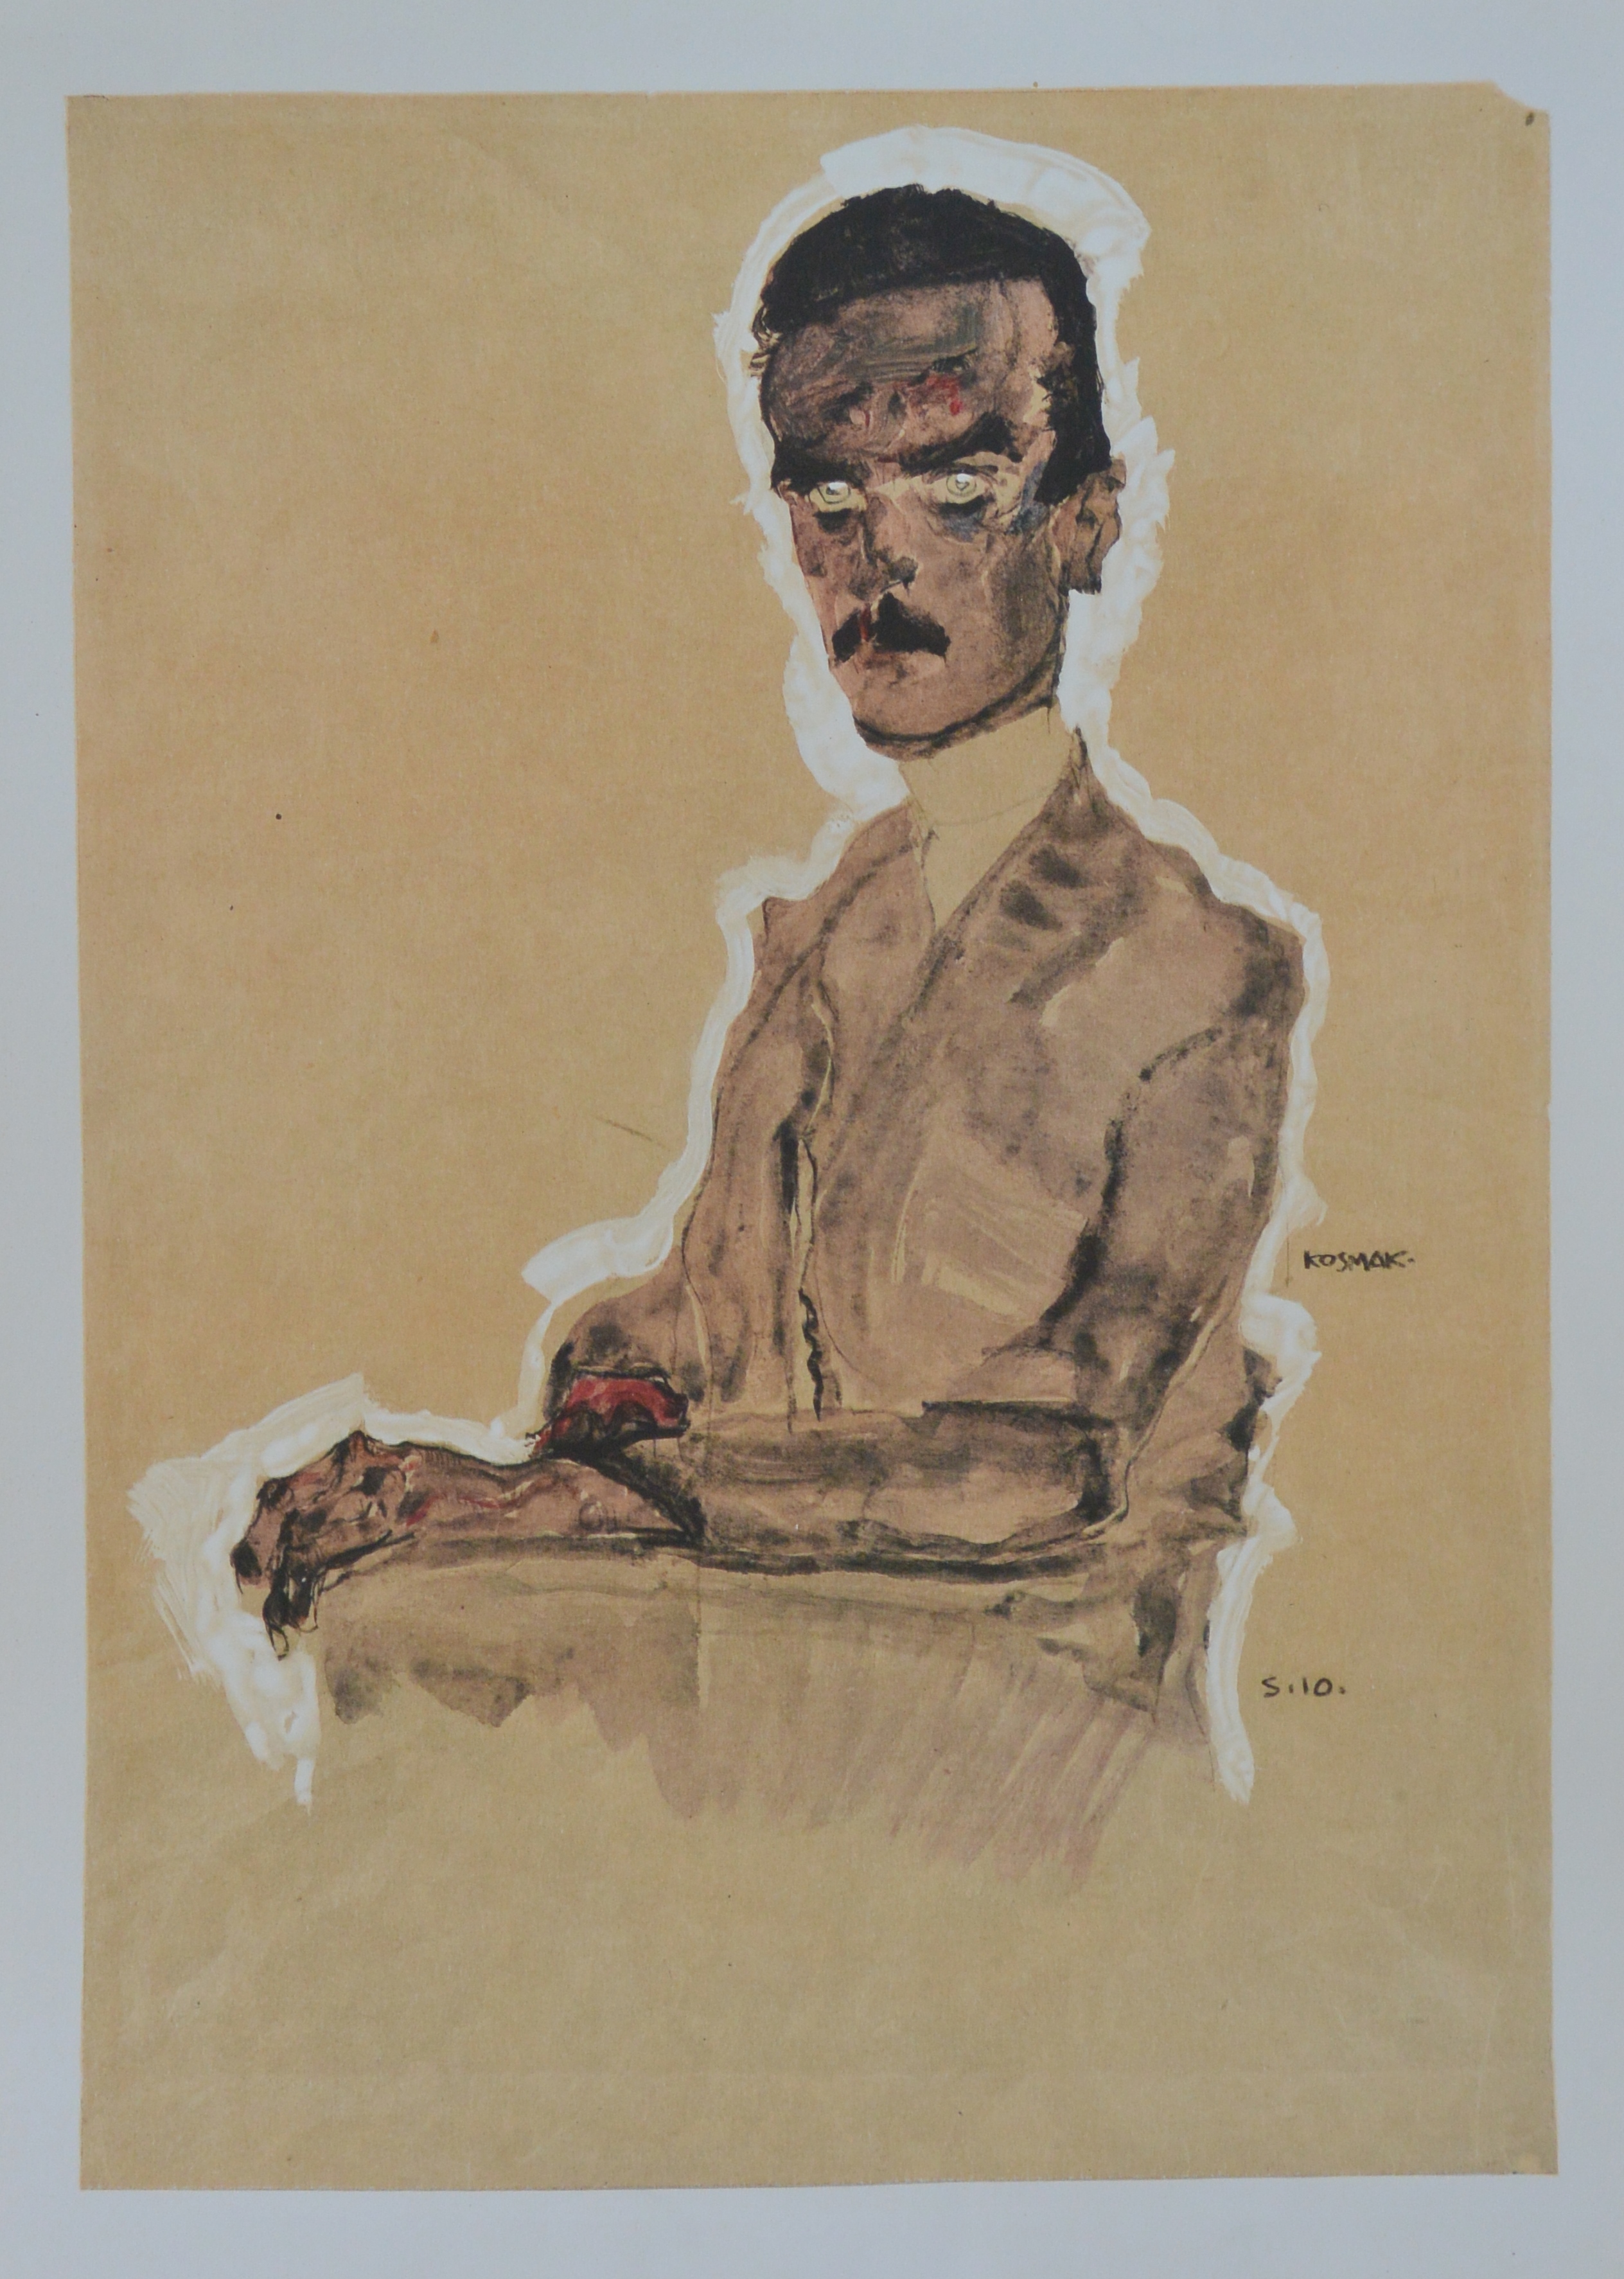 Egon Schiele Portrait Of Eduard Kosmack Seated Reproducci N El